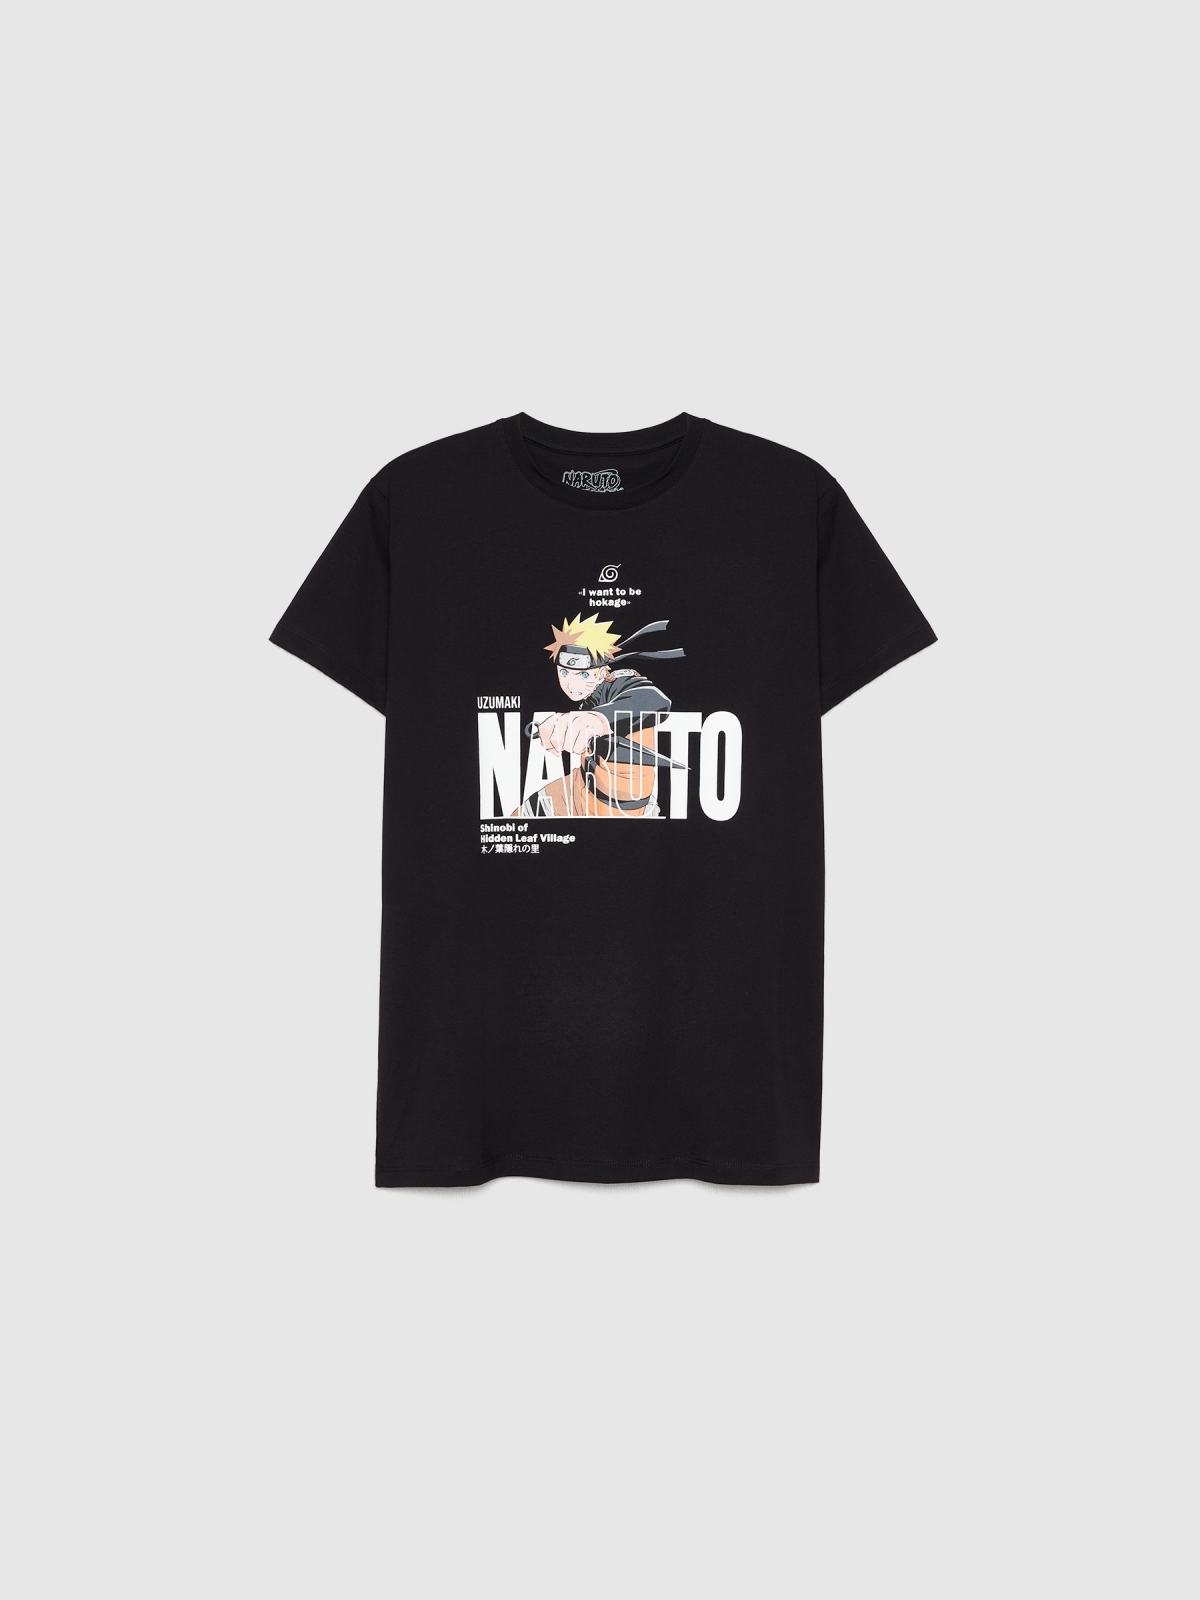  Naruto text T-shirt black